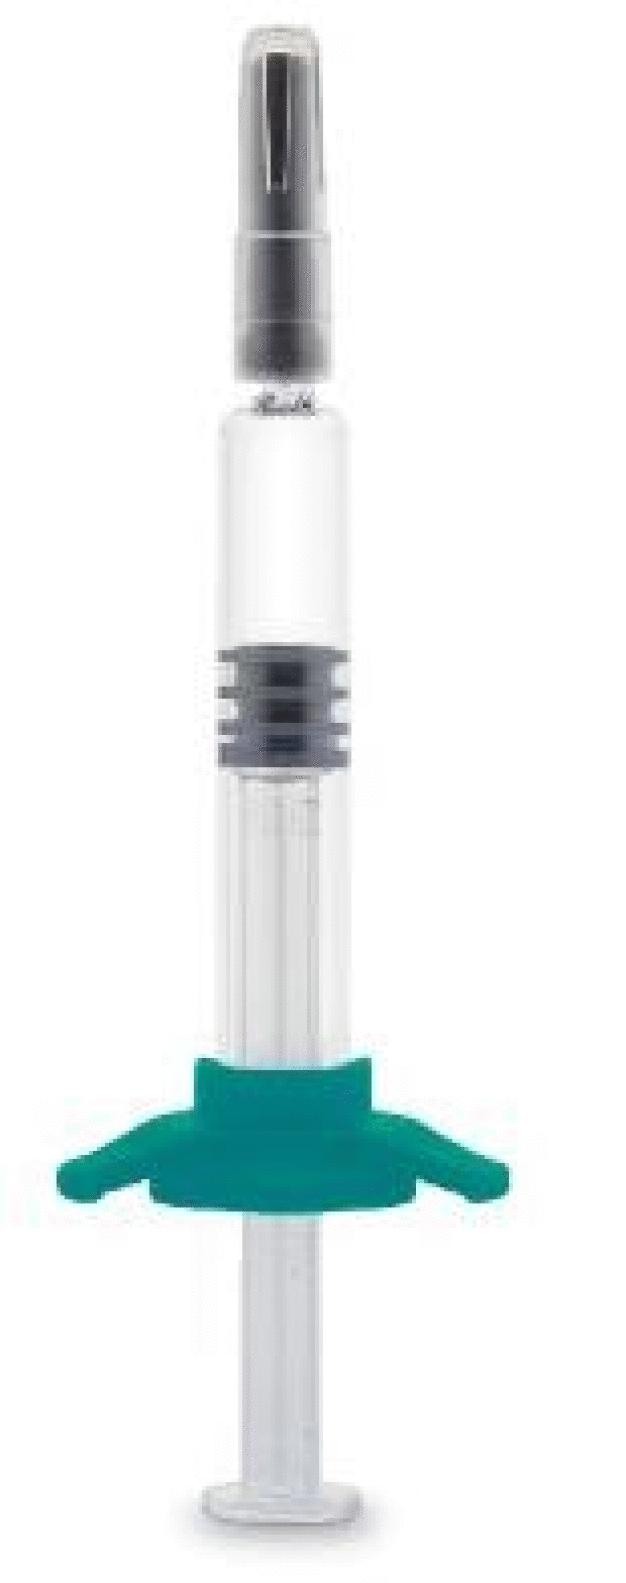 Die neue Gx RTF ClearJect 2,25 ml Polymer-Nadelspritze. / The new Gx RTF ClearJect 2.25 ml polymer needle syringe.